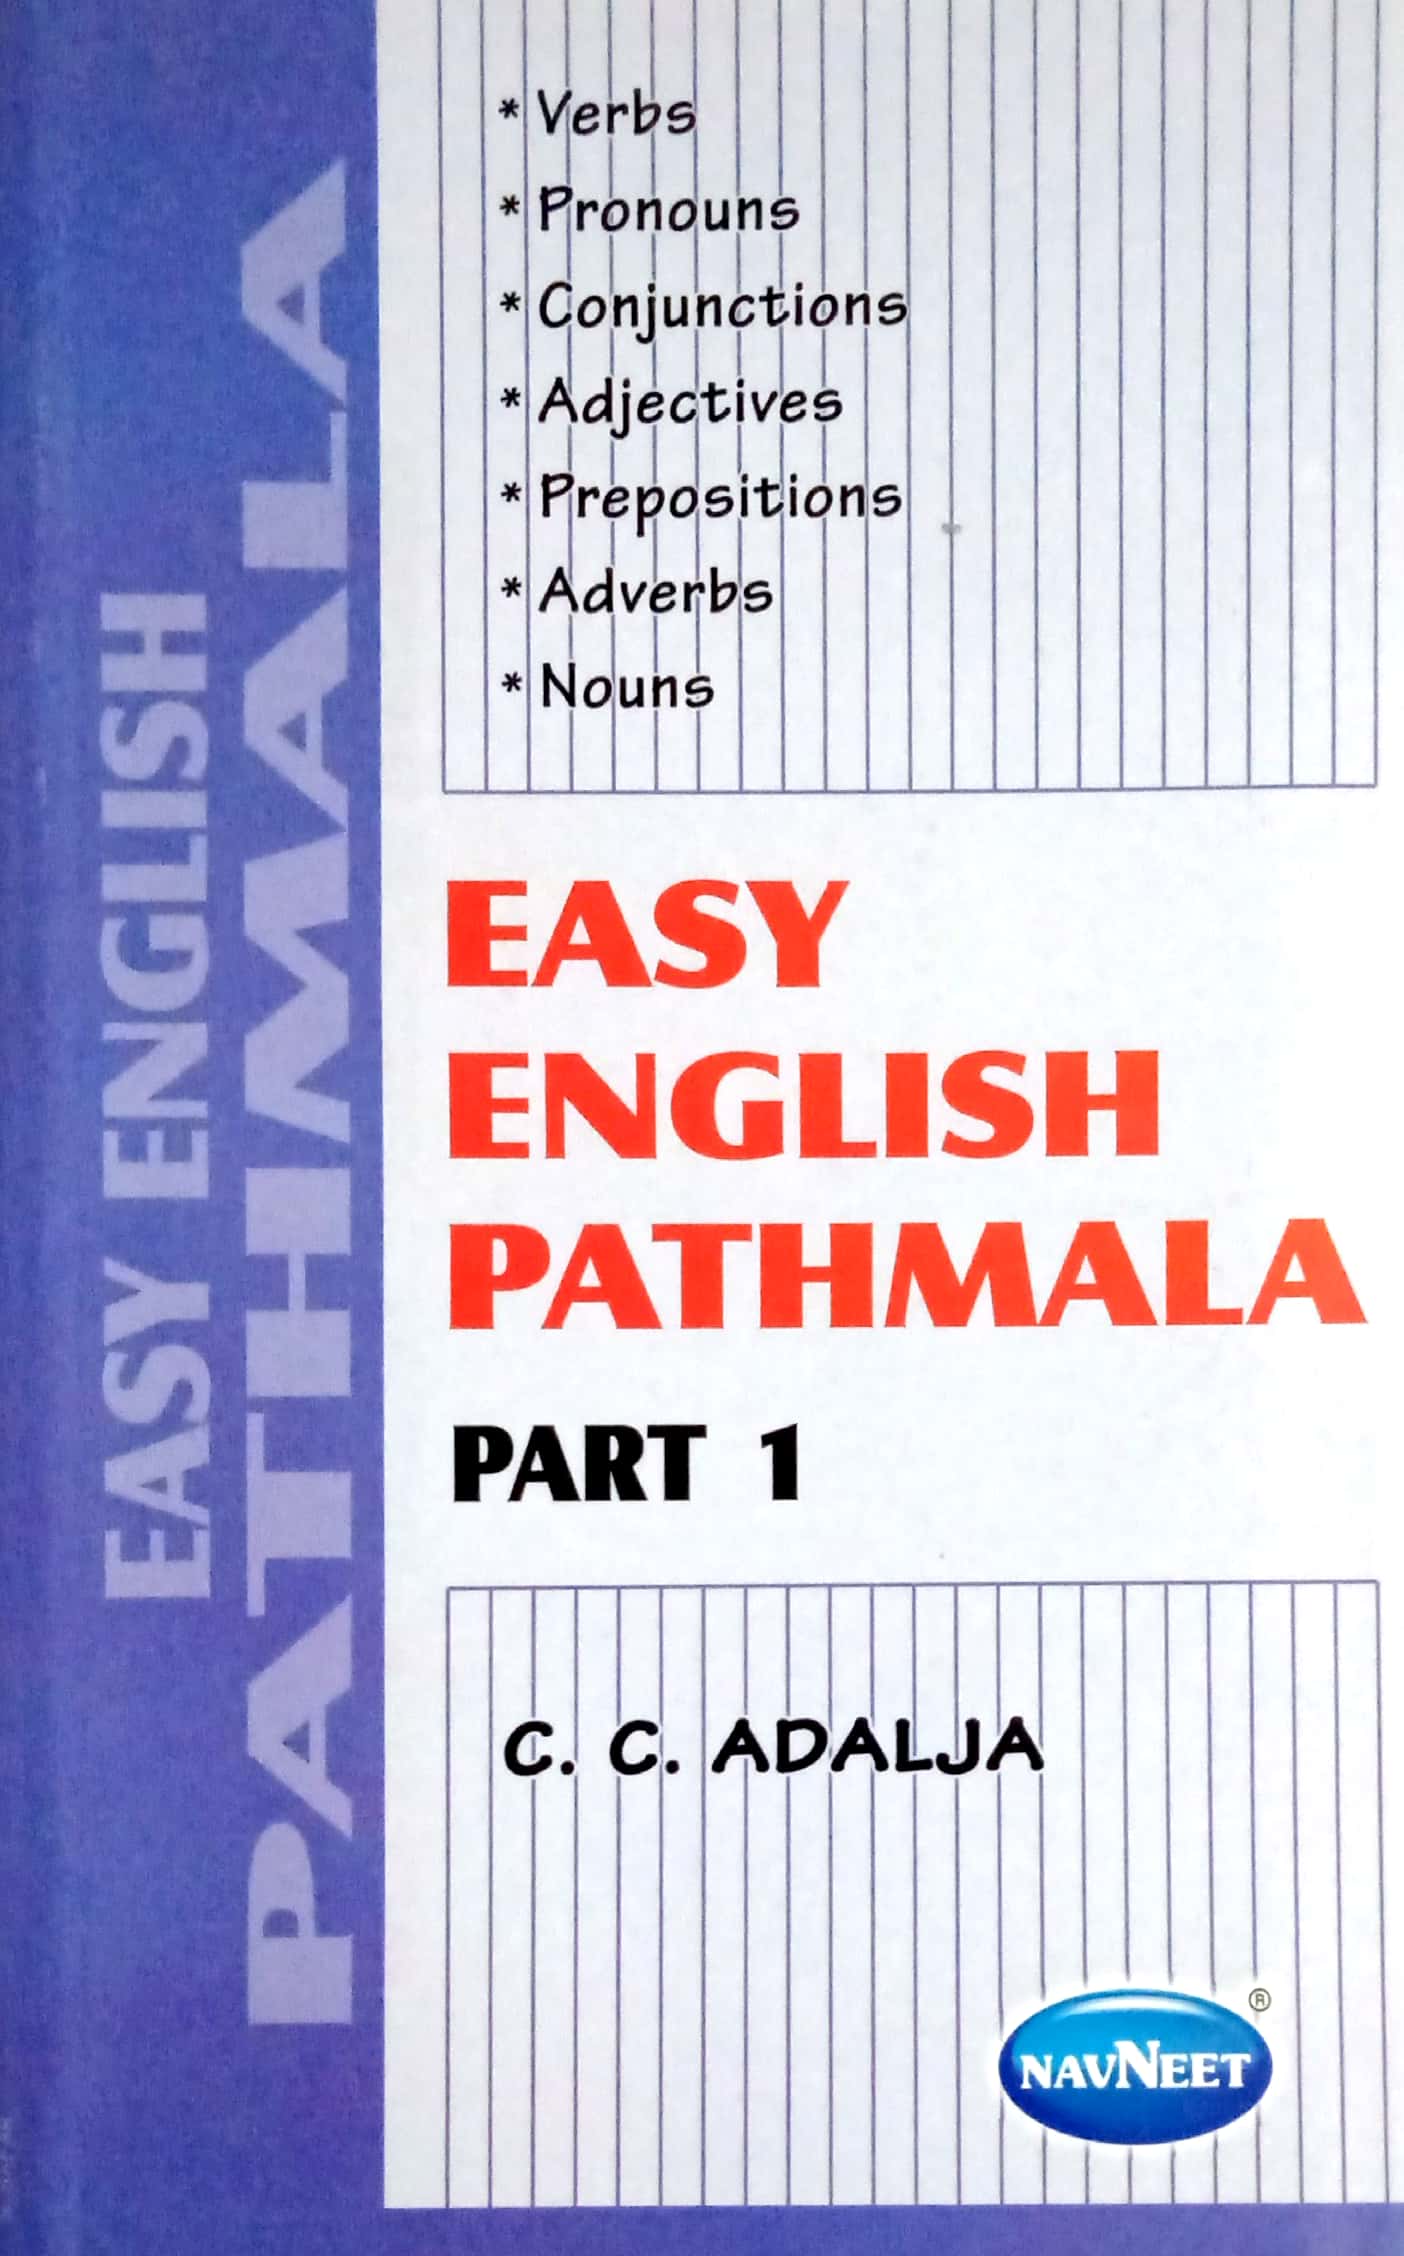 Easy English Pathmala